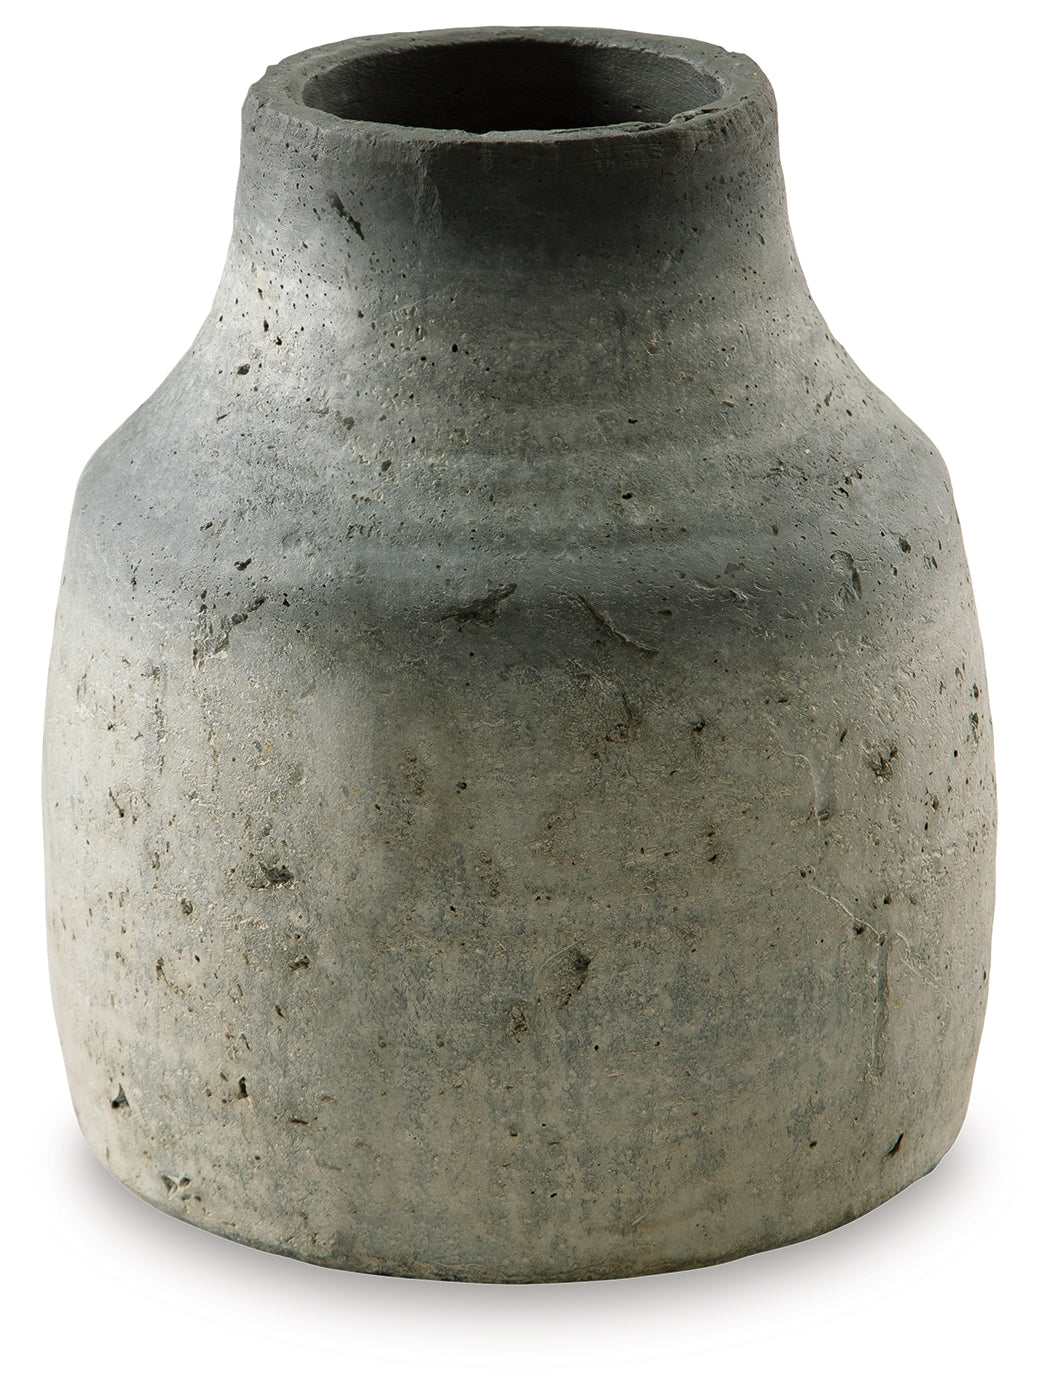 Moorestone Gray/Black Vase